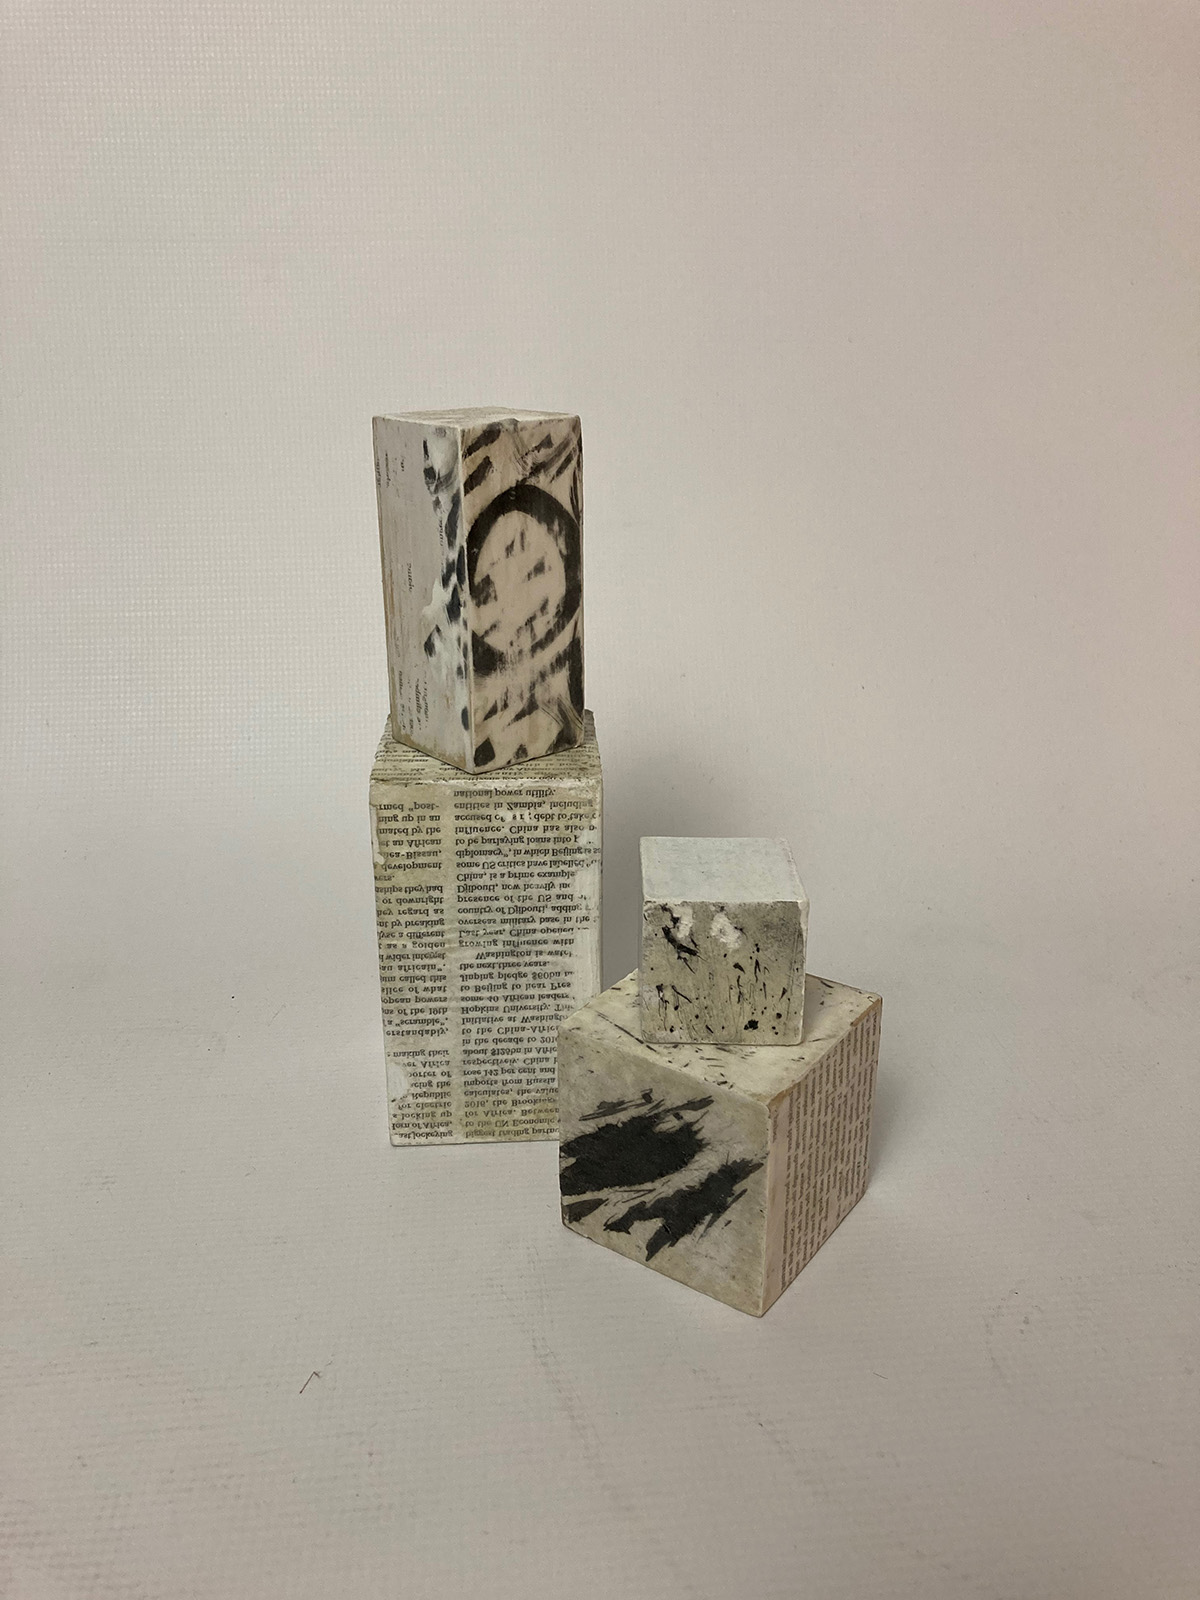 Wooden sculptural blocks, 4 pieces, 2 rectangular, 2 square